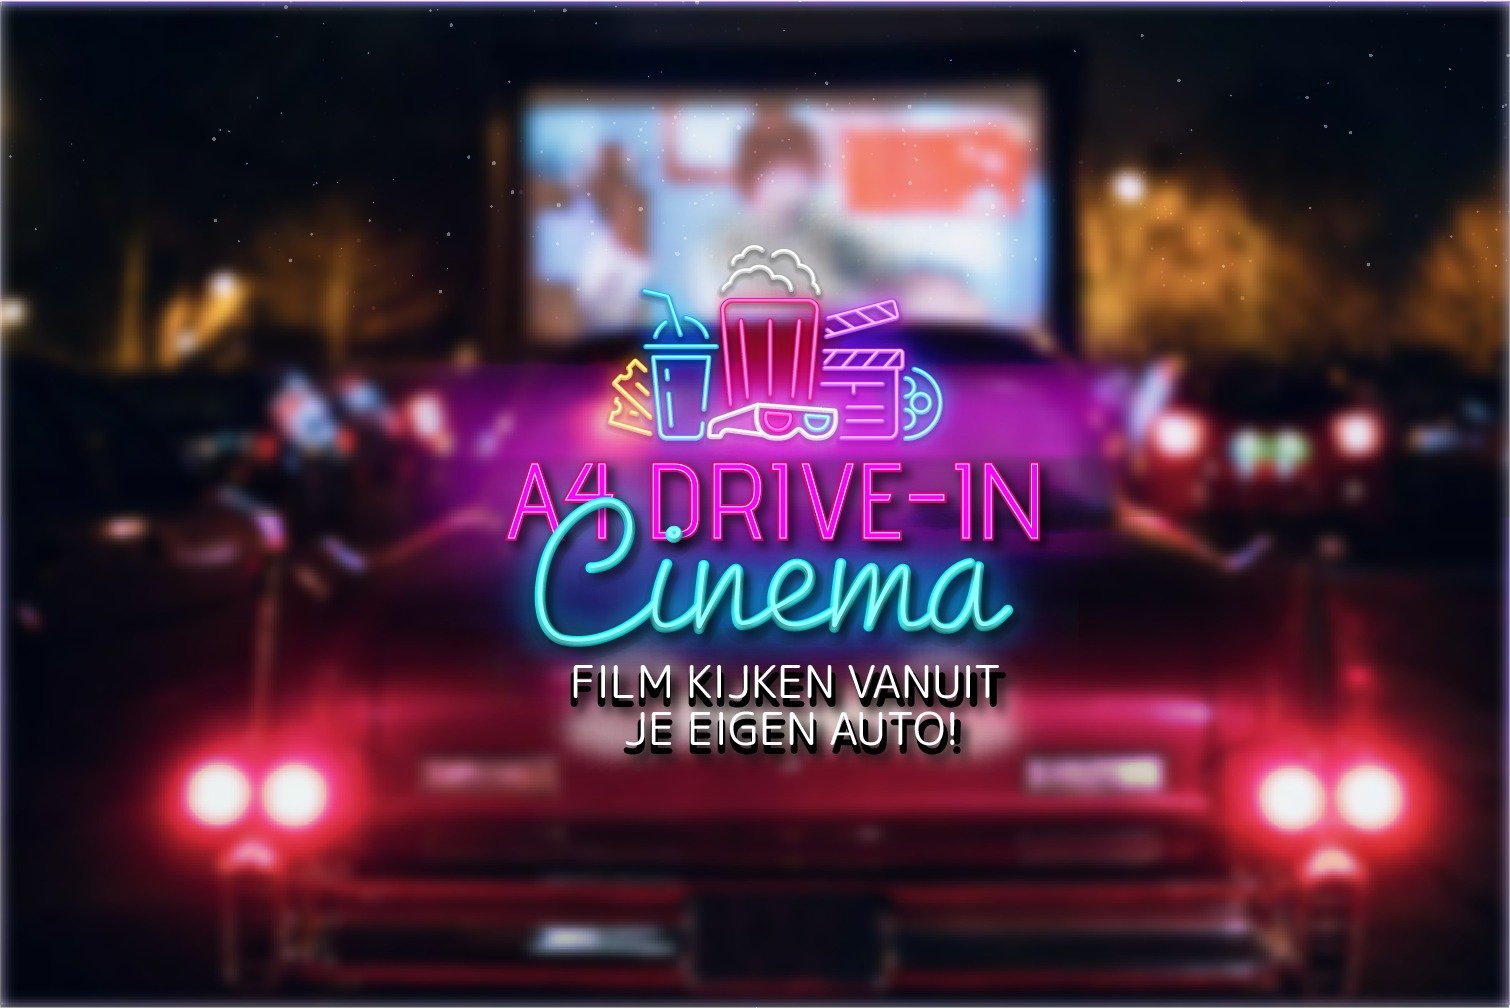 Drive-in bioscoop: Back to the future II